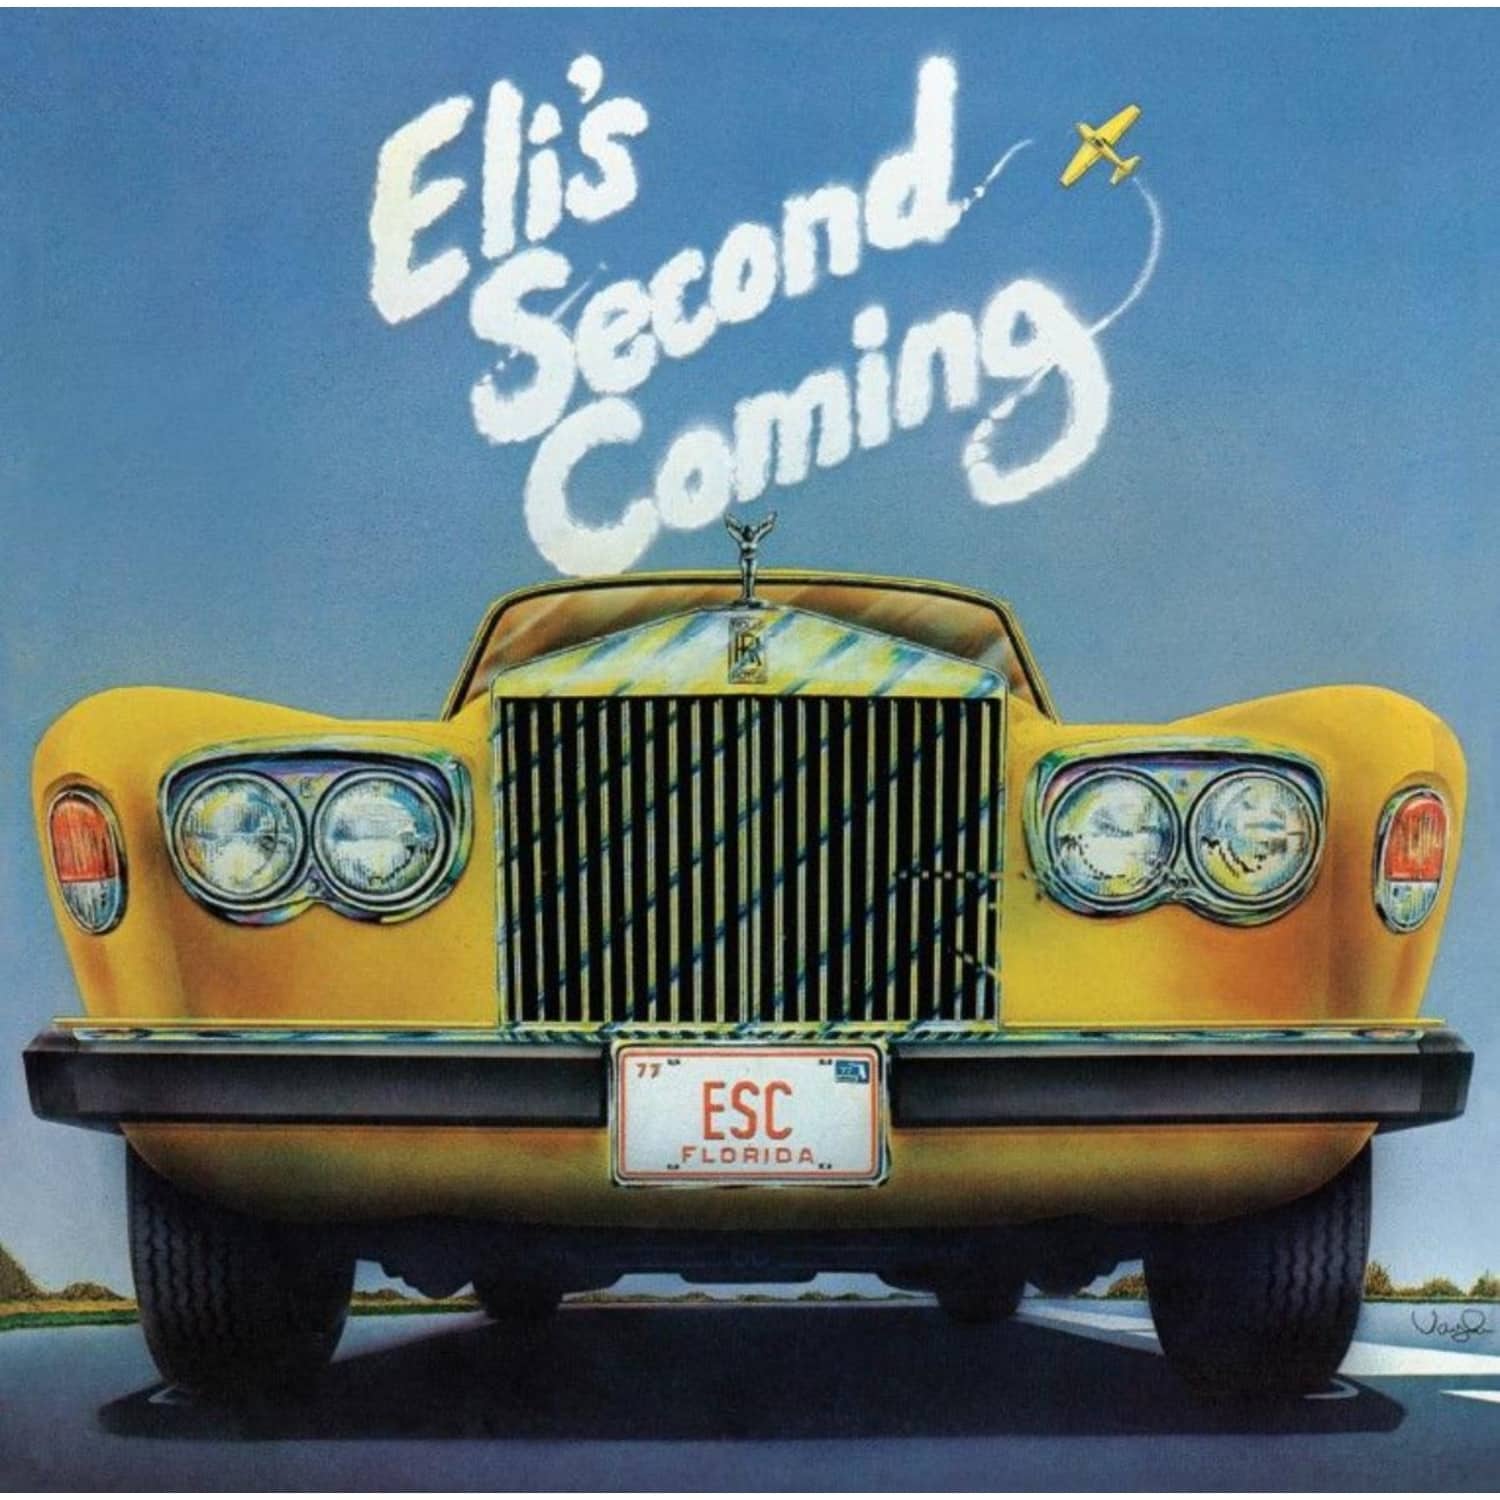 Eli s Second Coming - ELI S SECOND COMING 